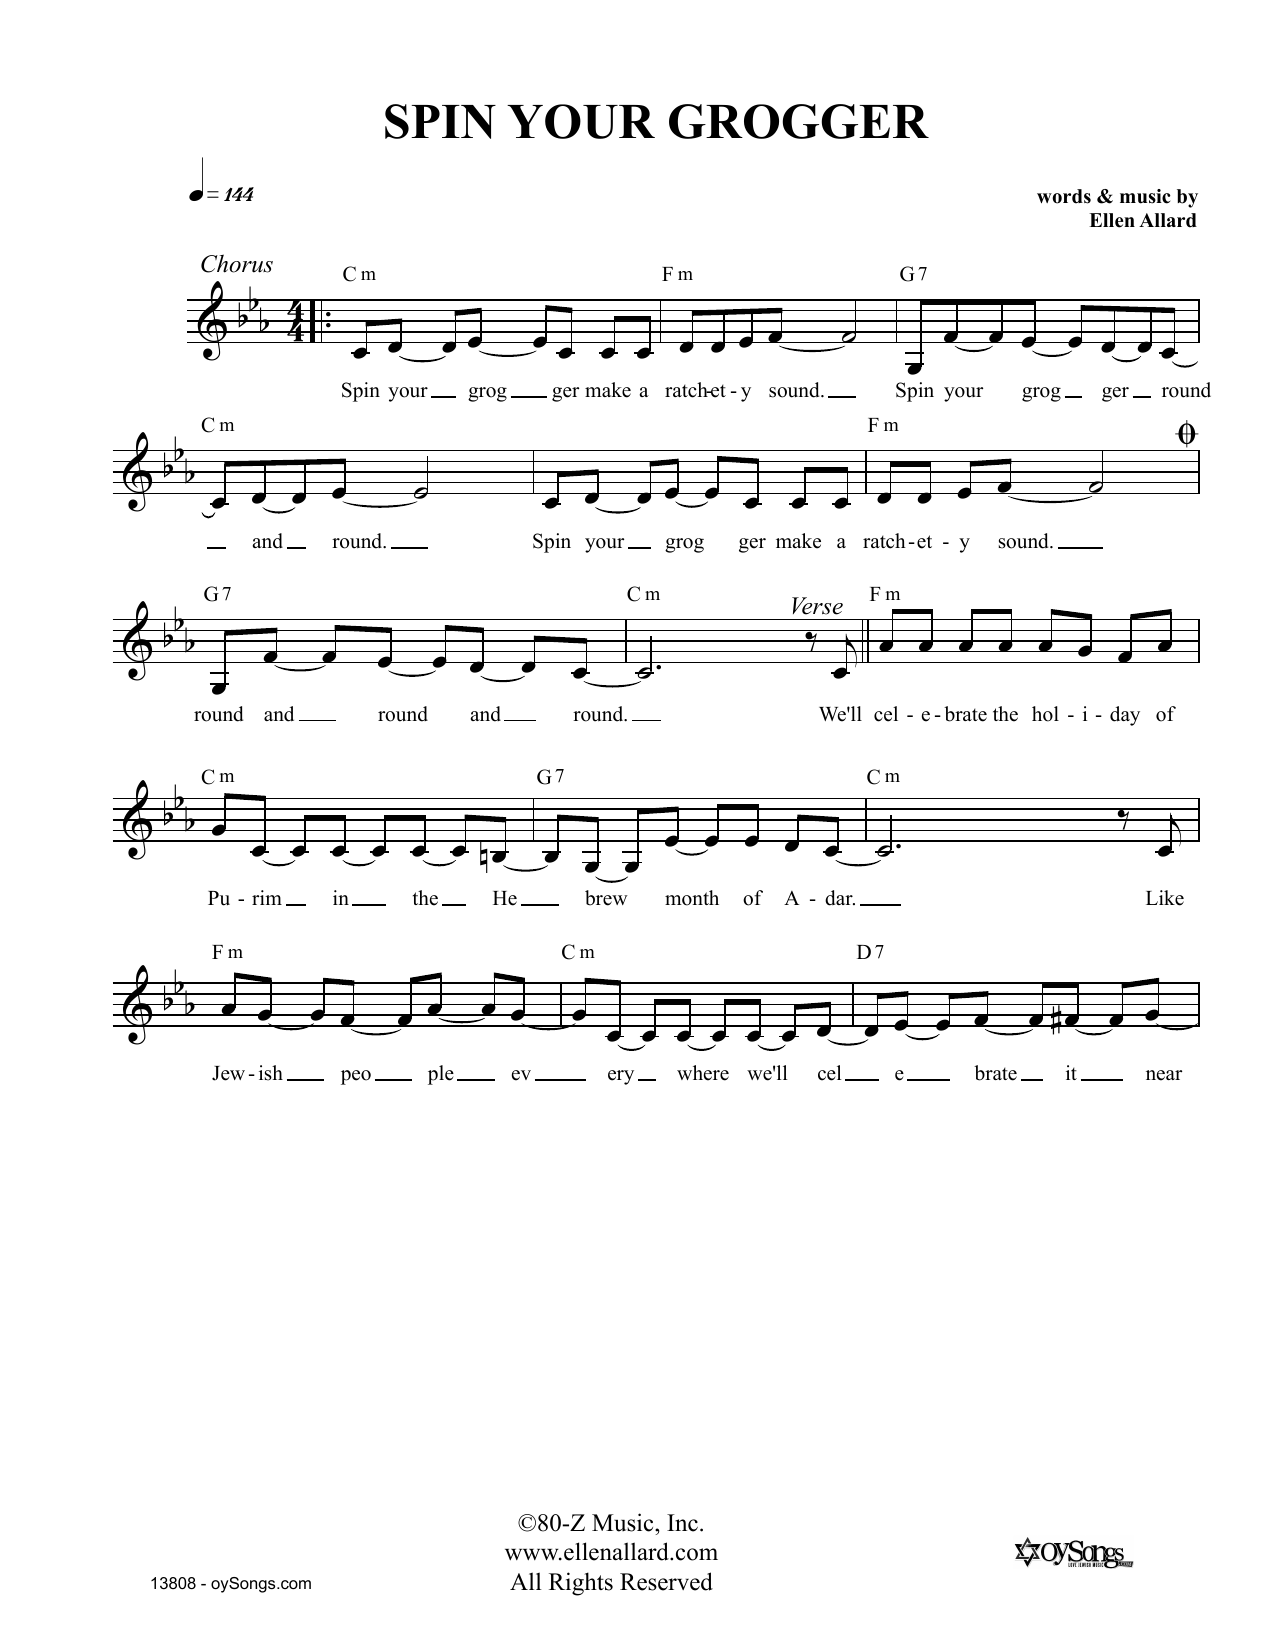 Ellen Allard Spin Your Grogger Sheet Music Notes & Chords for Melody Line, Lyrics & Chords - Download or Print PDF